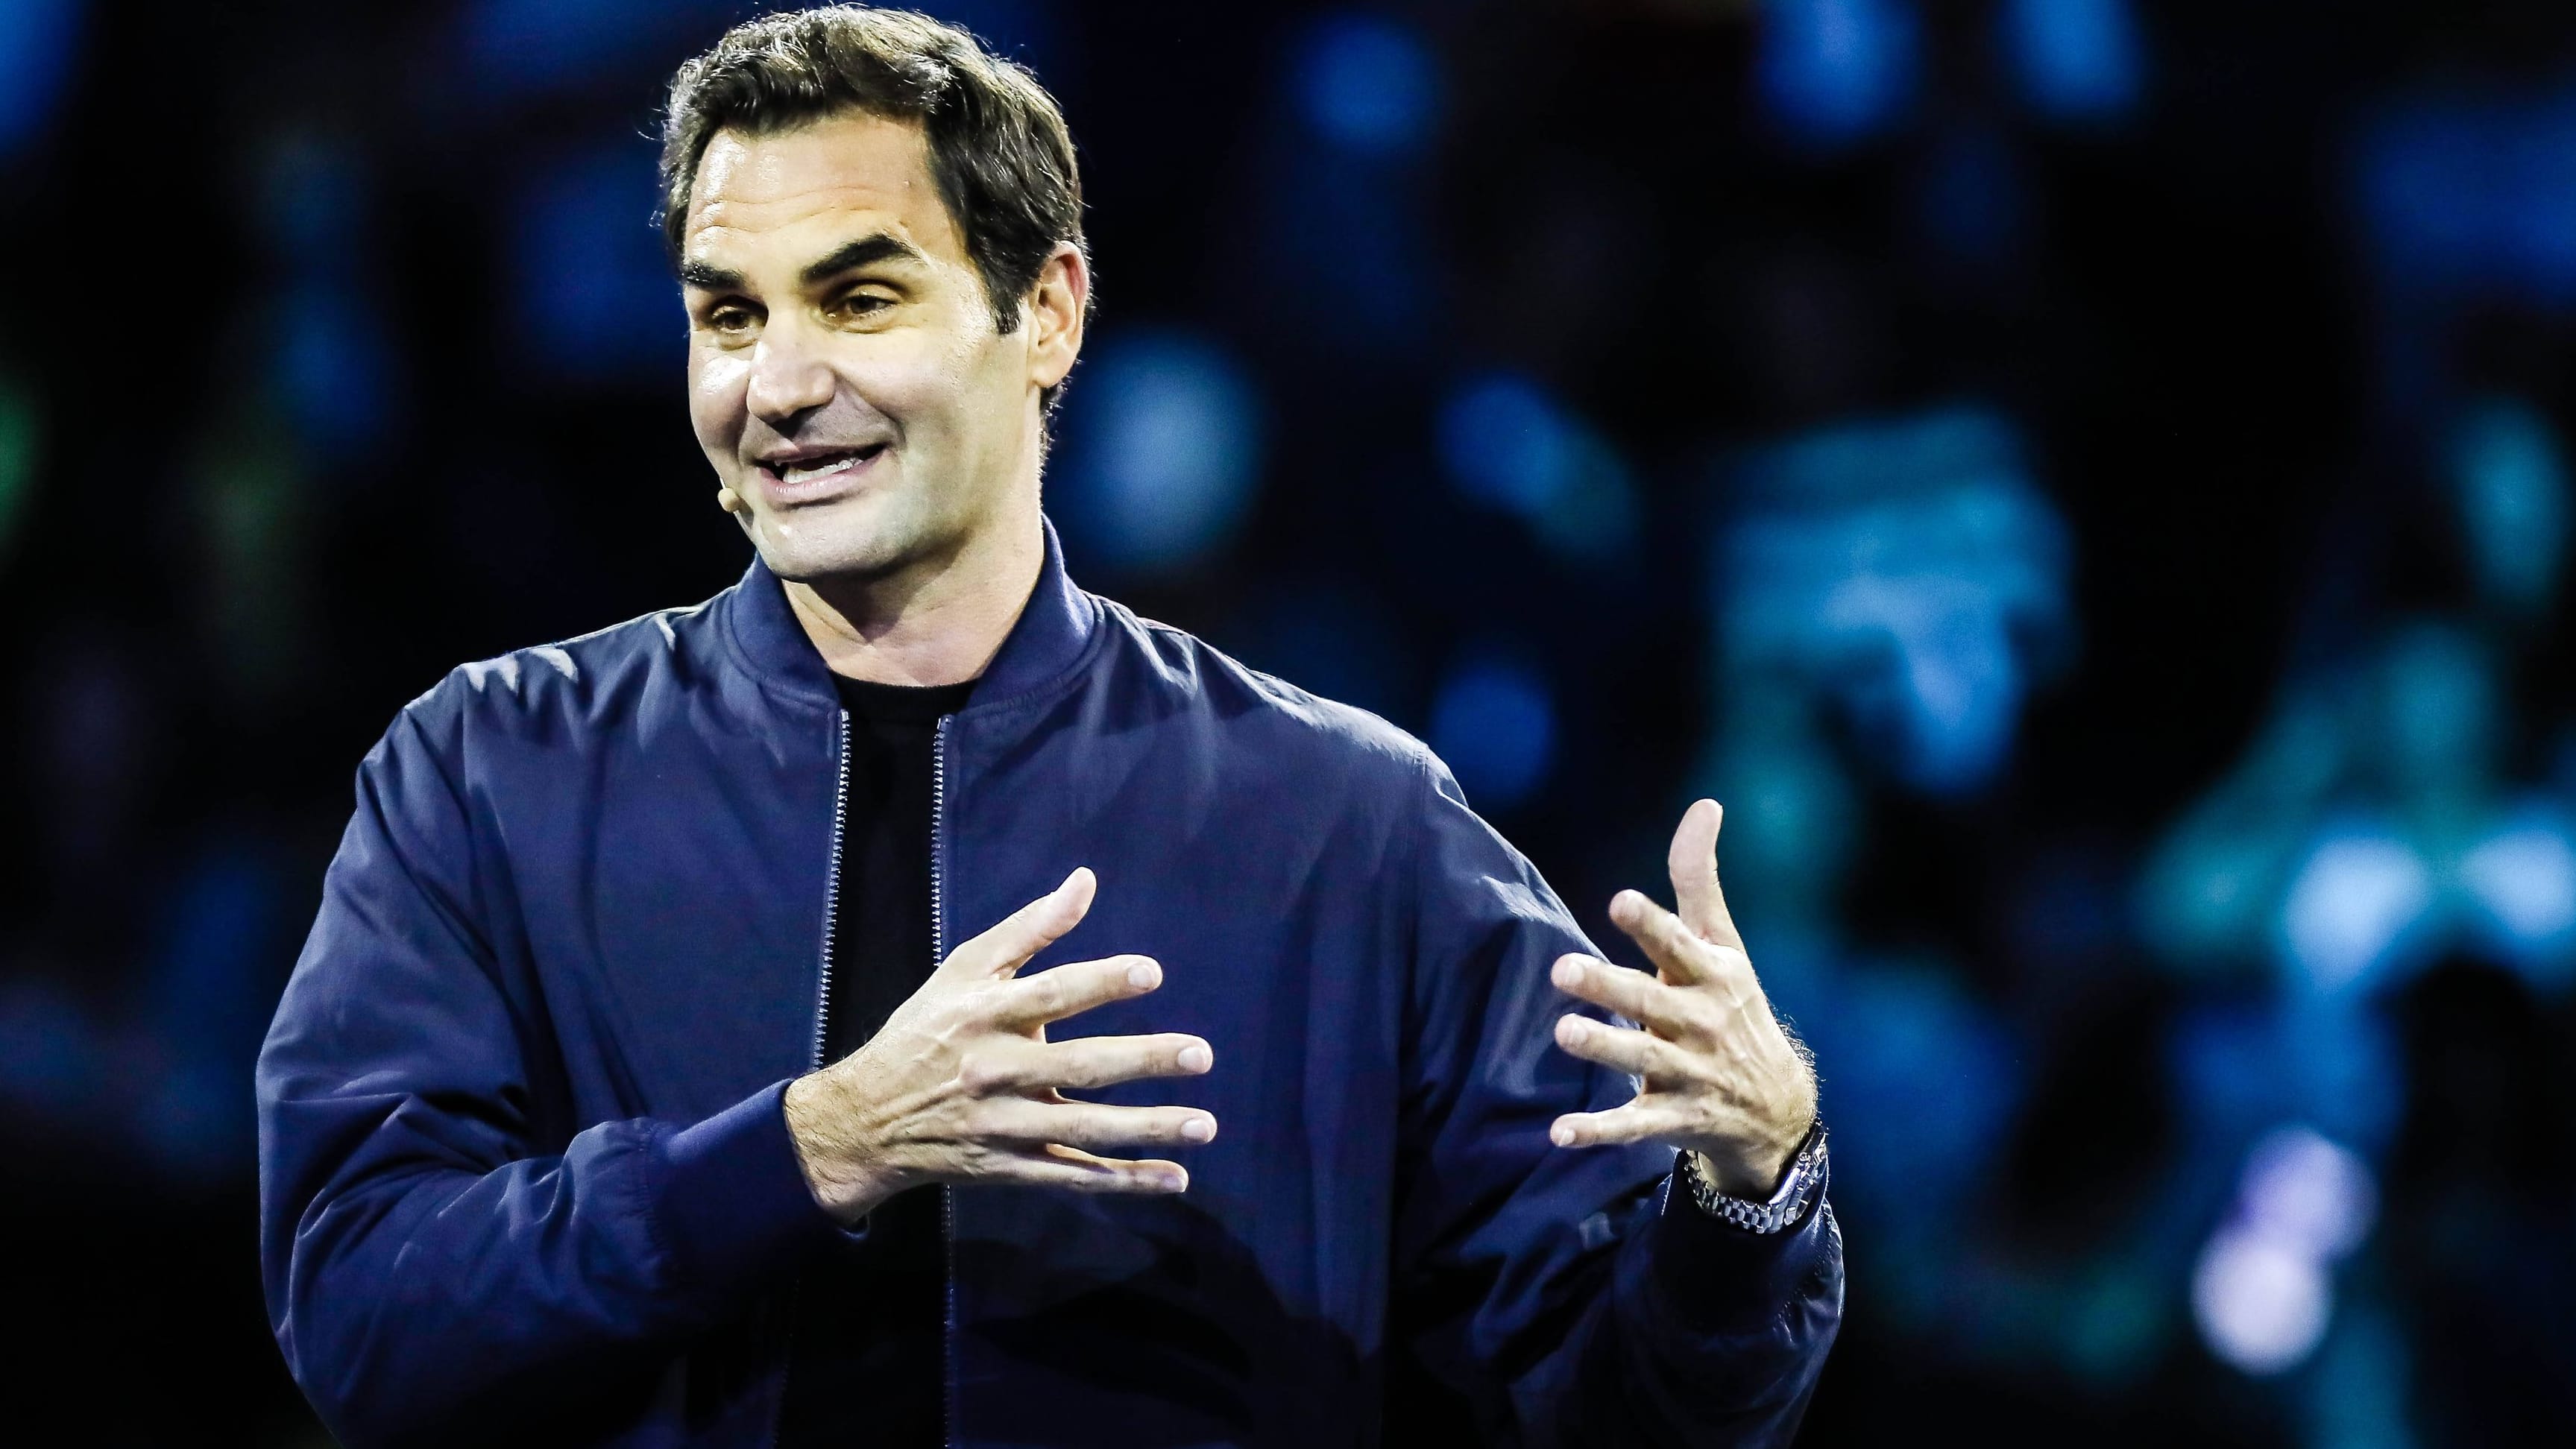 Dokumentarfilm über Weltstar Roger Federer vom Oscar-Preisträger bekannt gegeben